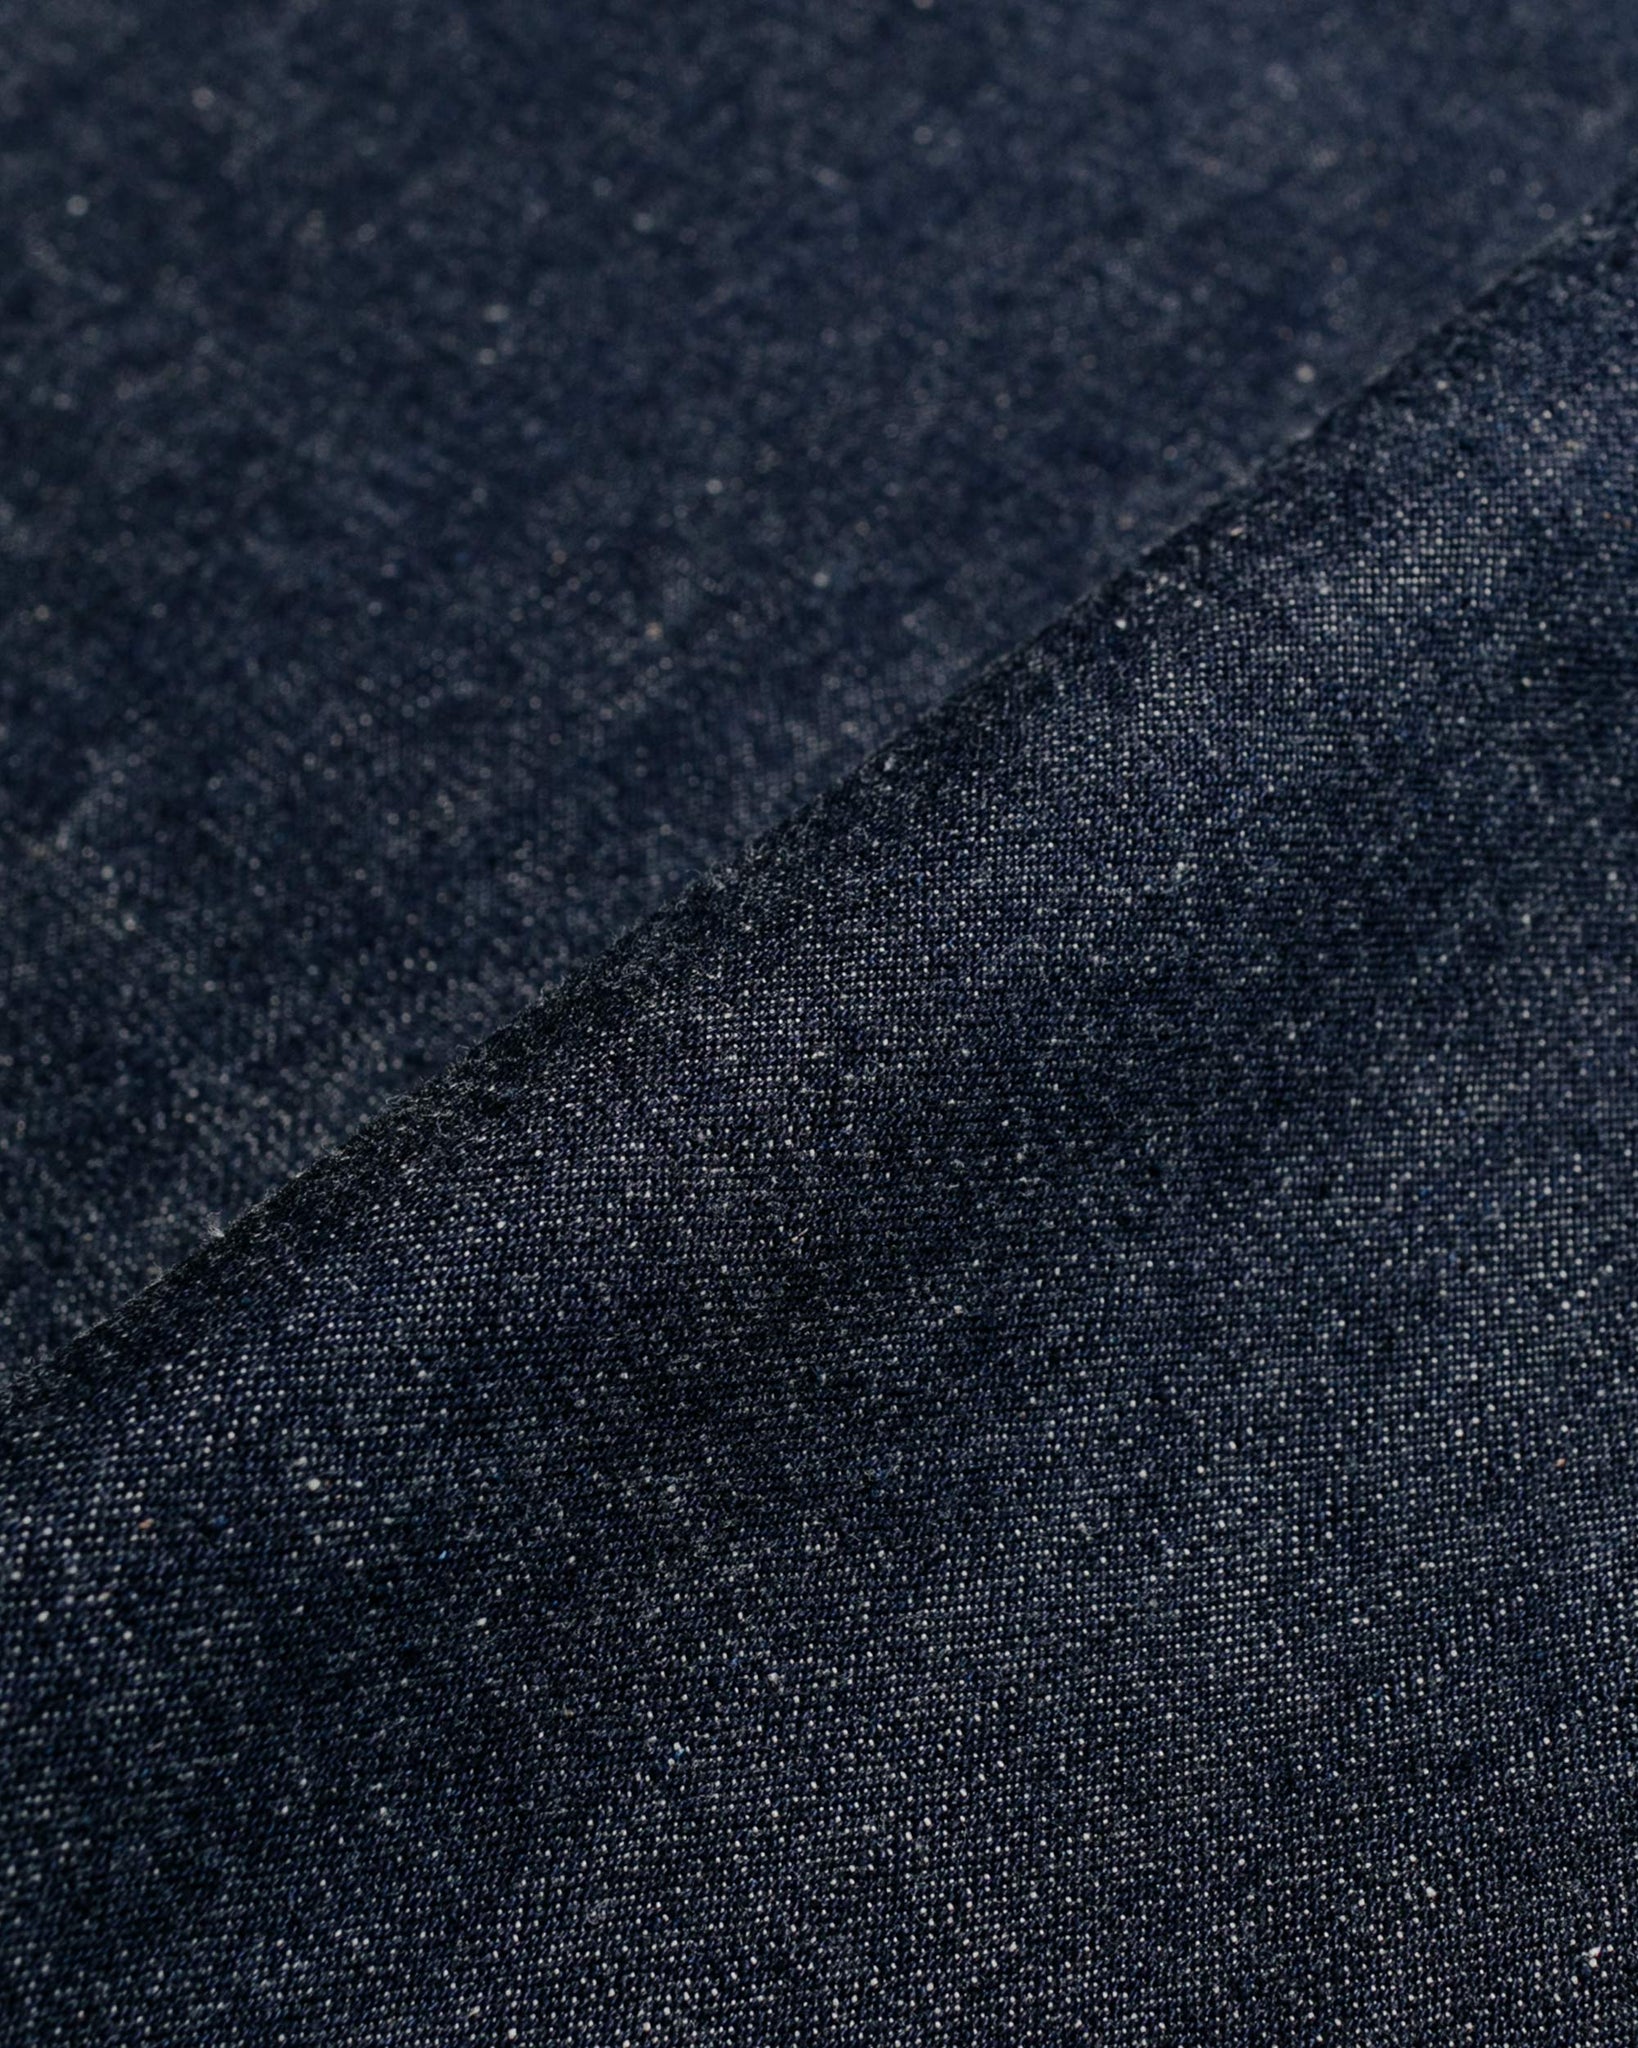 Warehouse Lot. JG-01 1910s Netmaker's Trousers Indigo Denim Original fabric